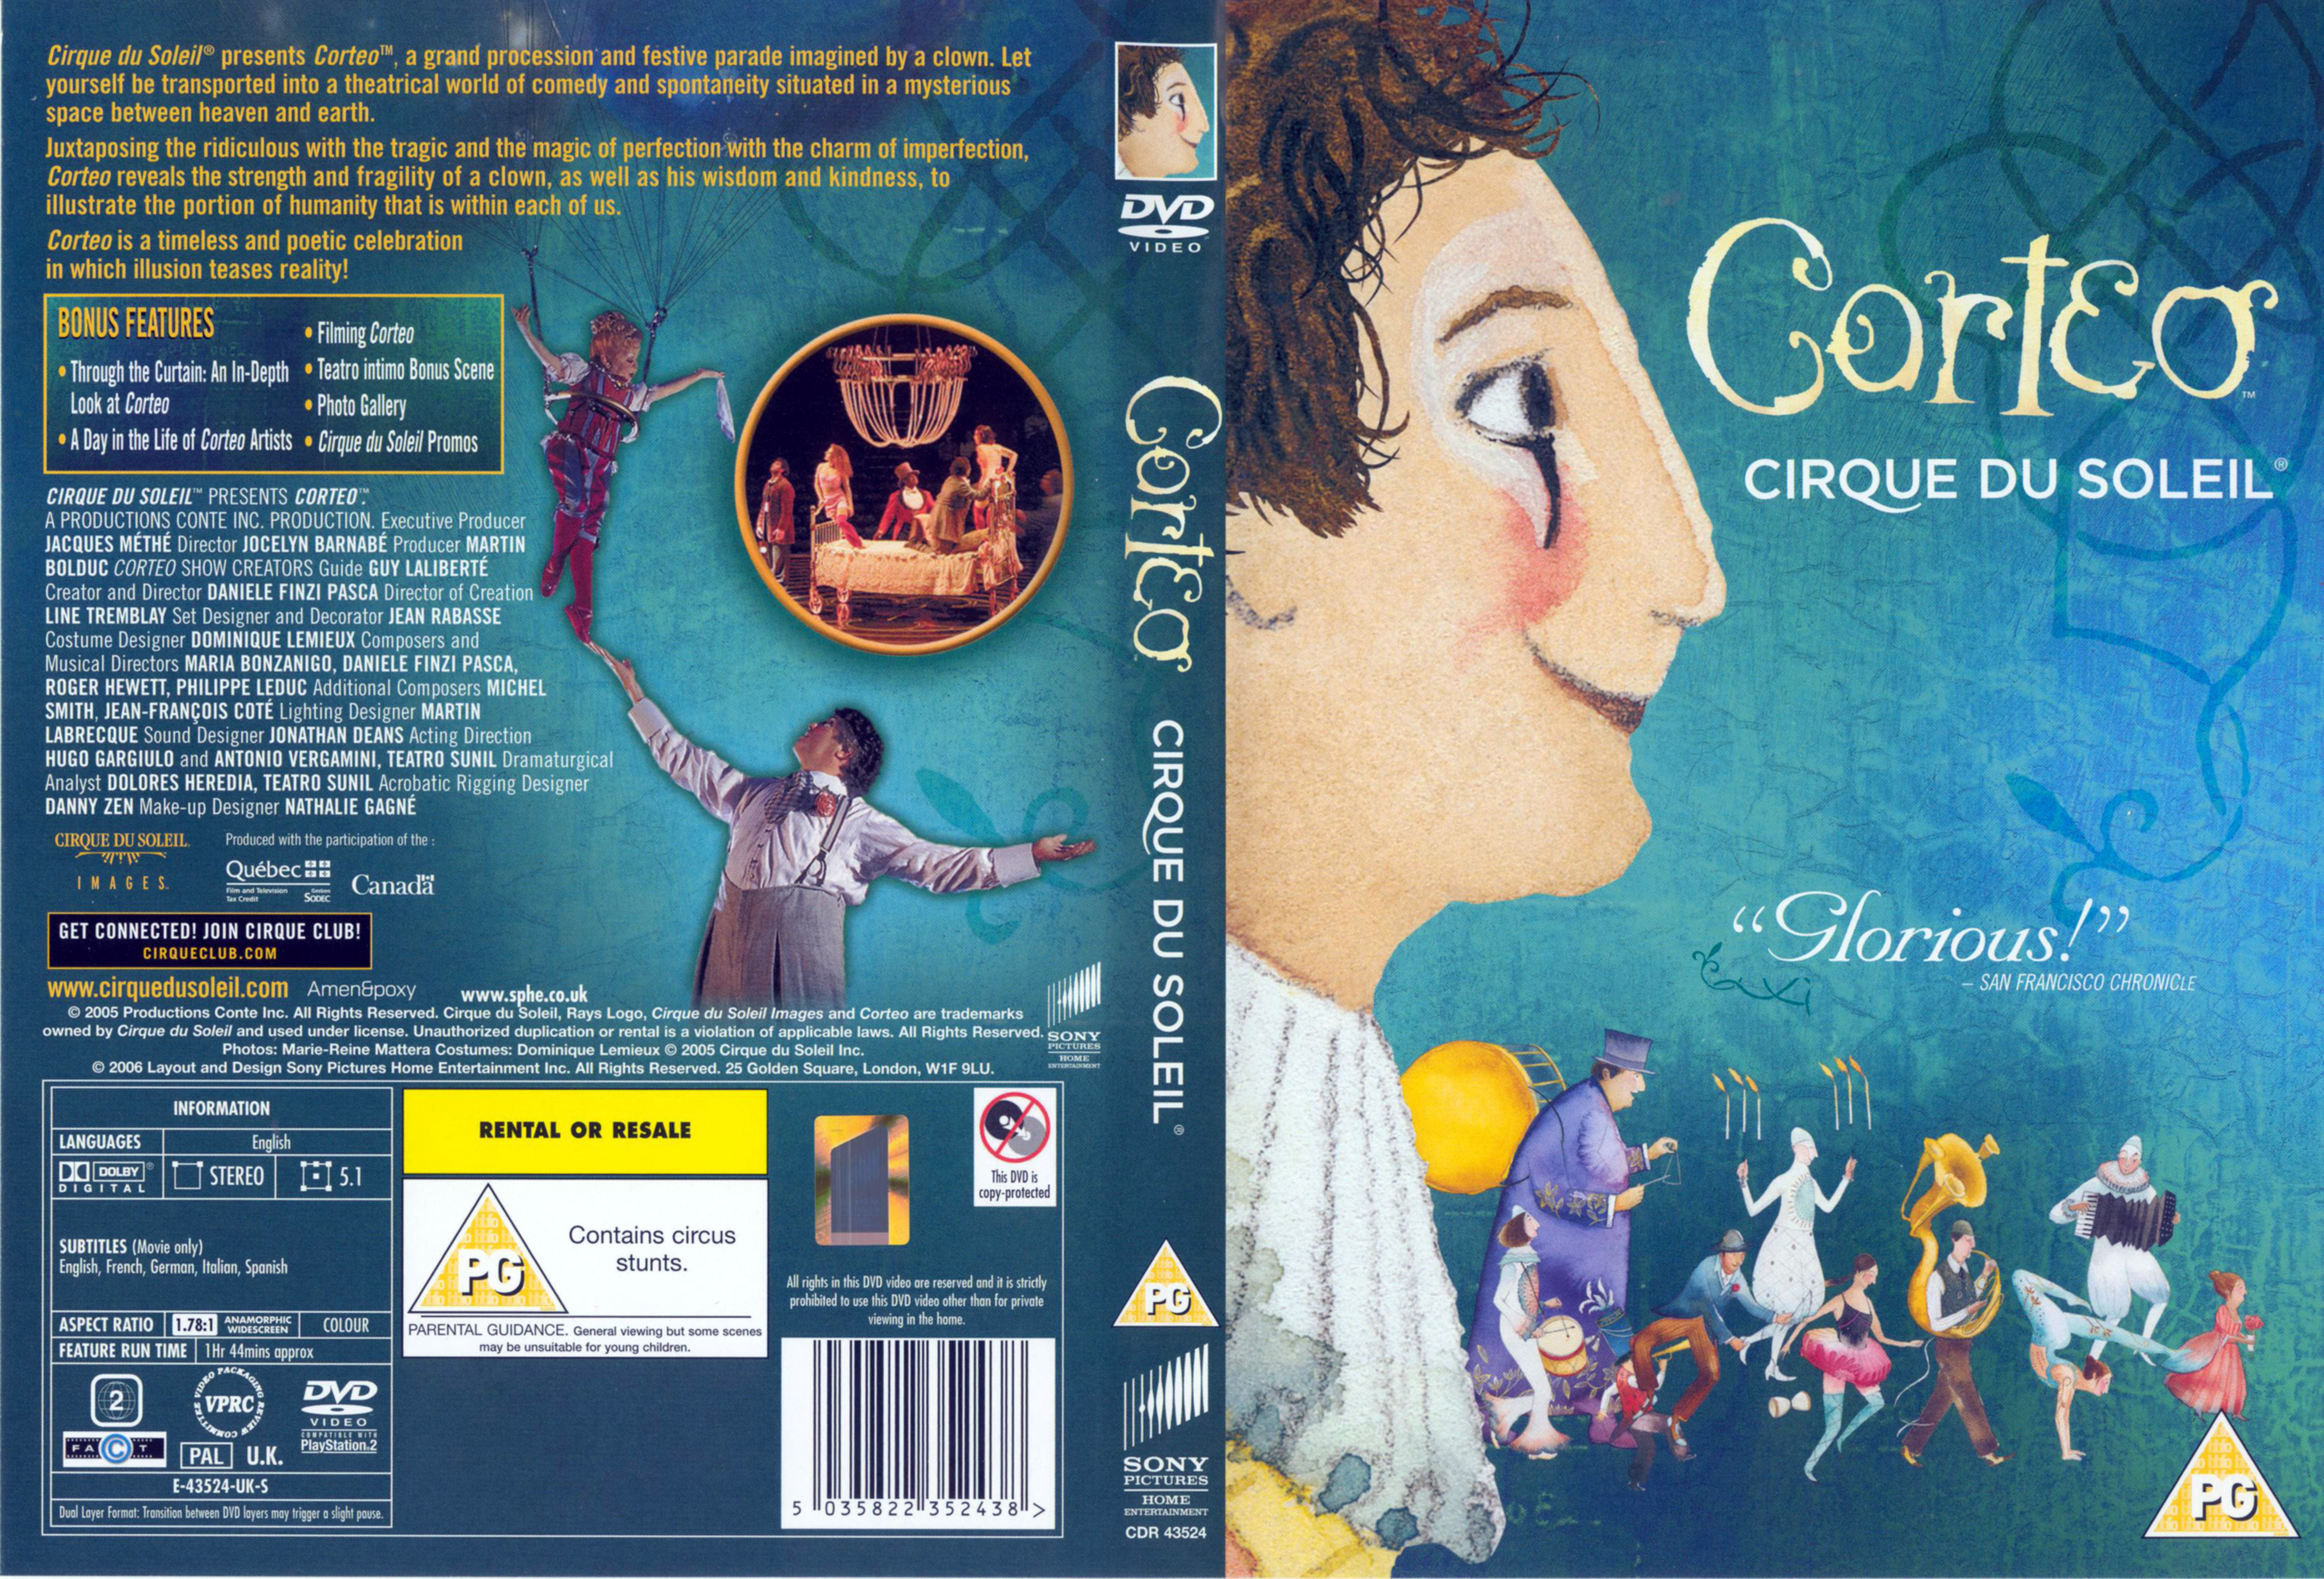 Jaquette DVD Corteo Cirque du Soleil